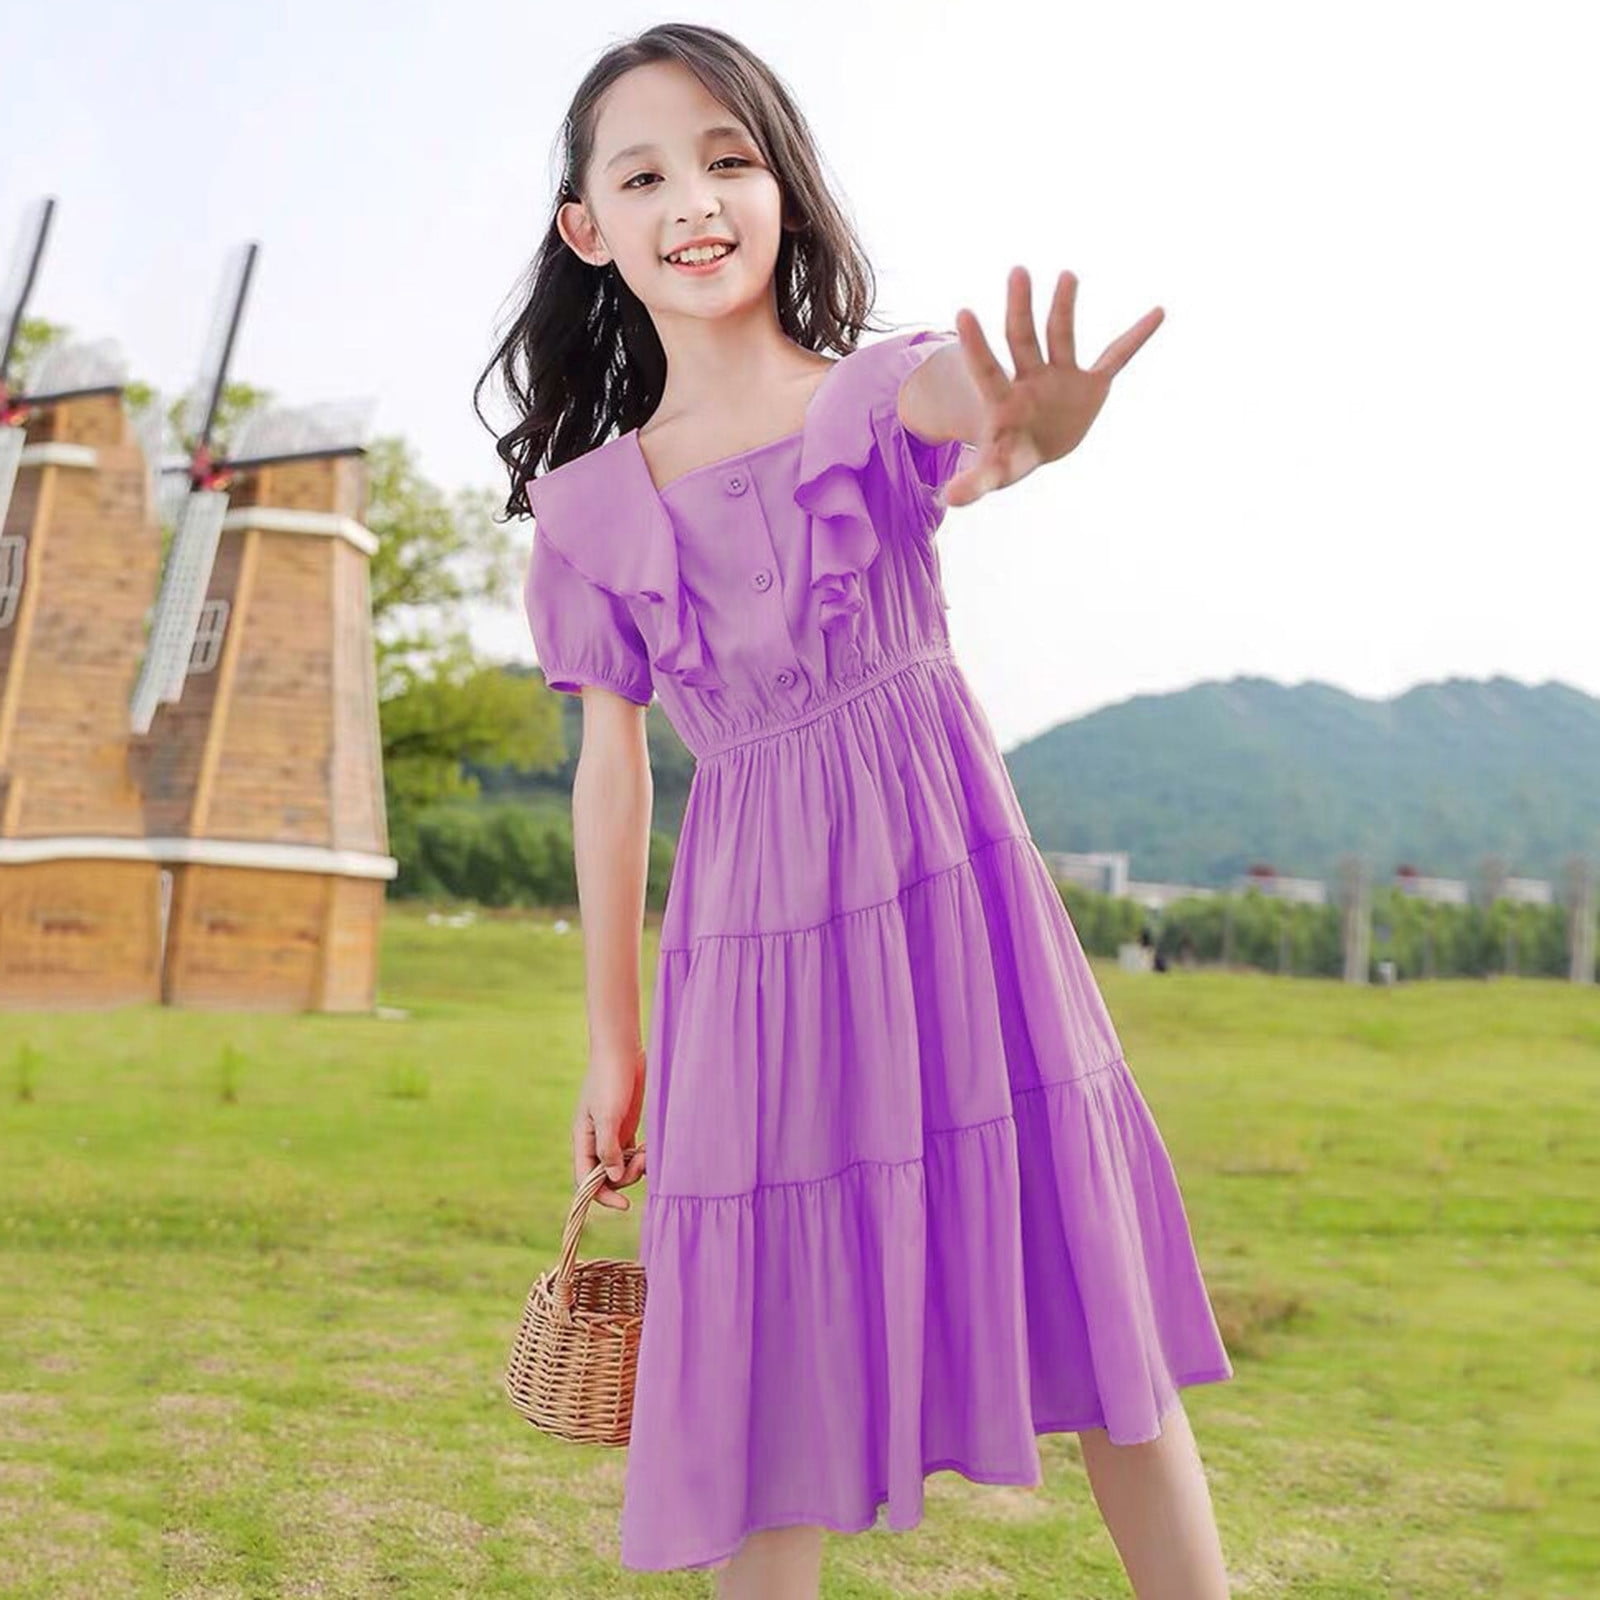 13 Years Old Dresses 14 Girls| Alibaba.com